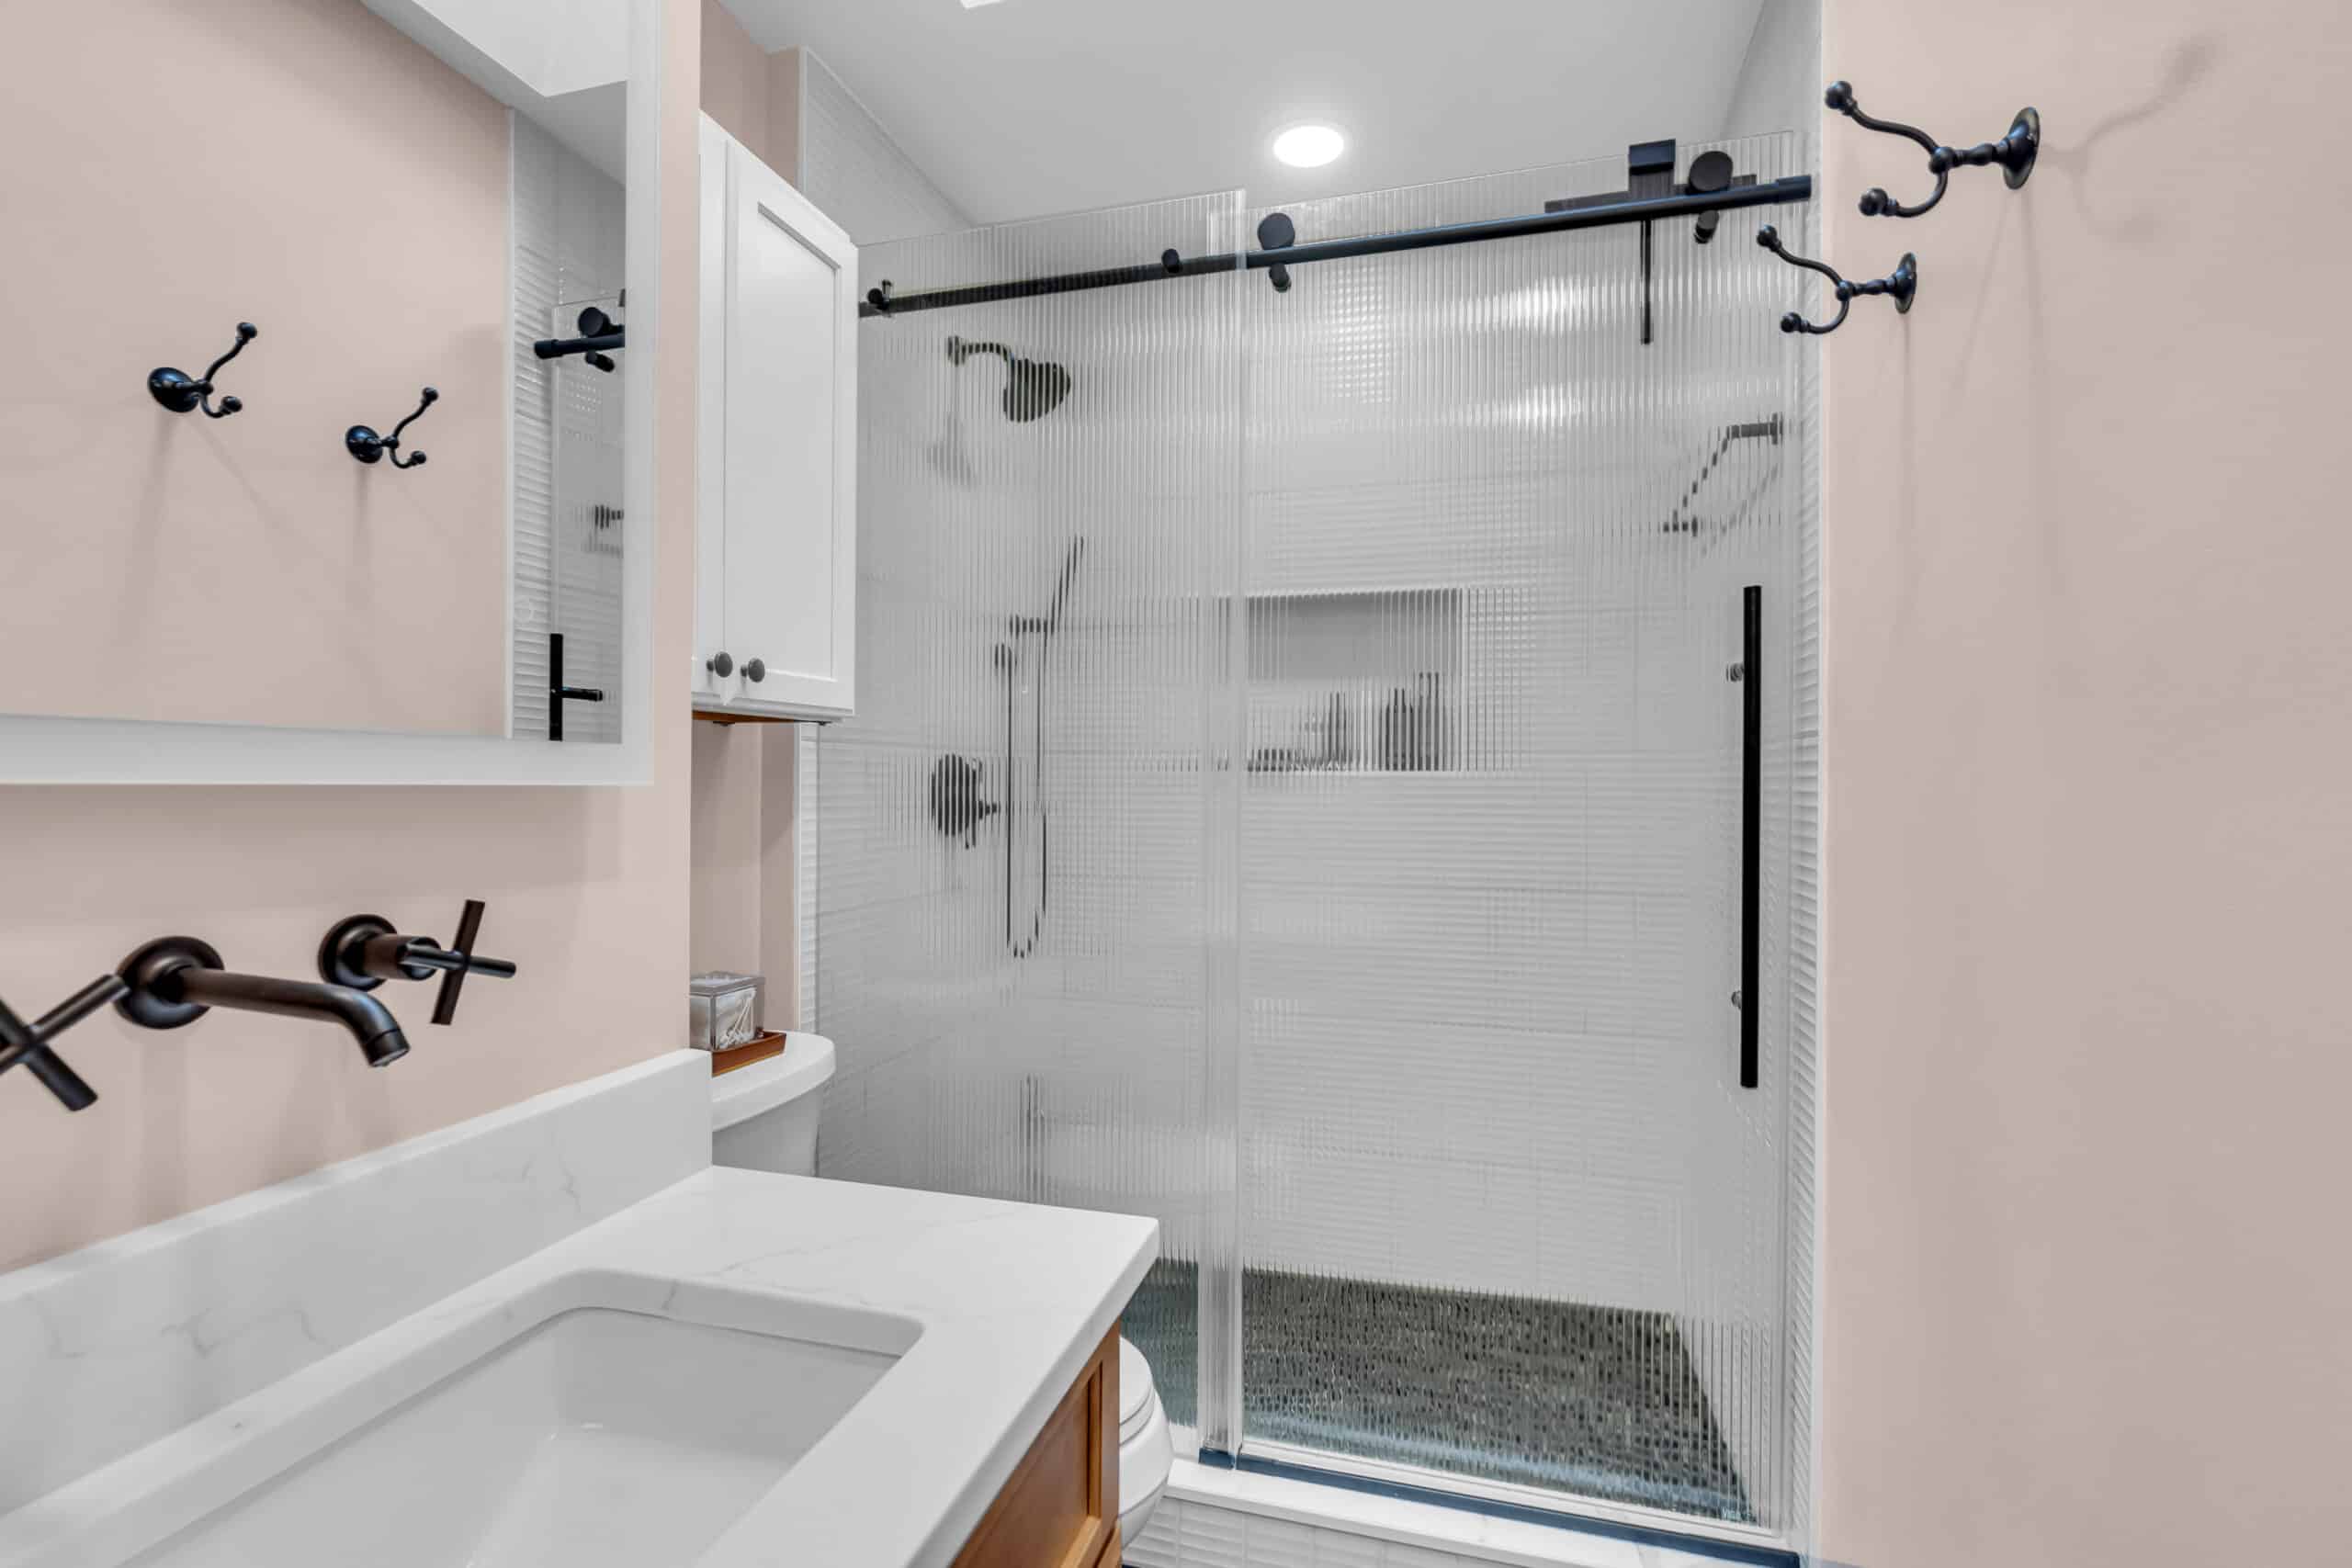 Beige bathroom with brown vanity, black hardware, and a shower